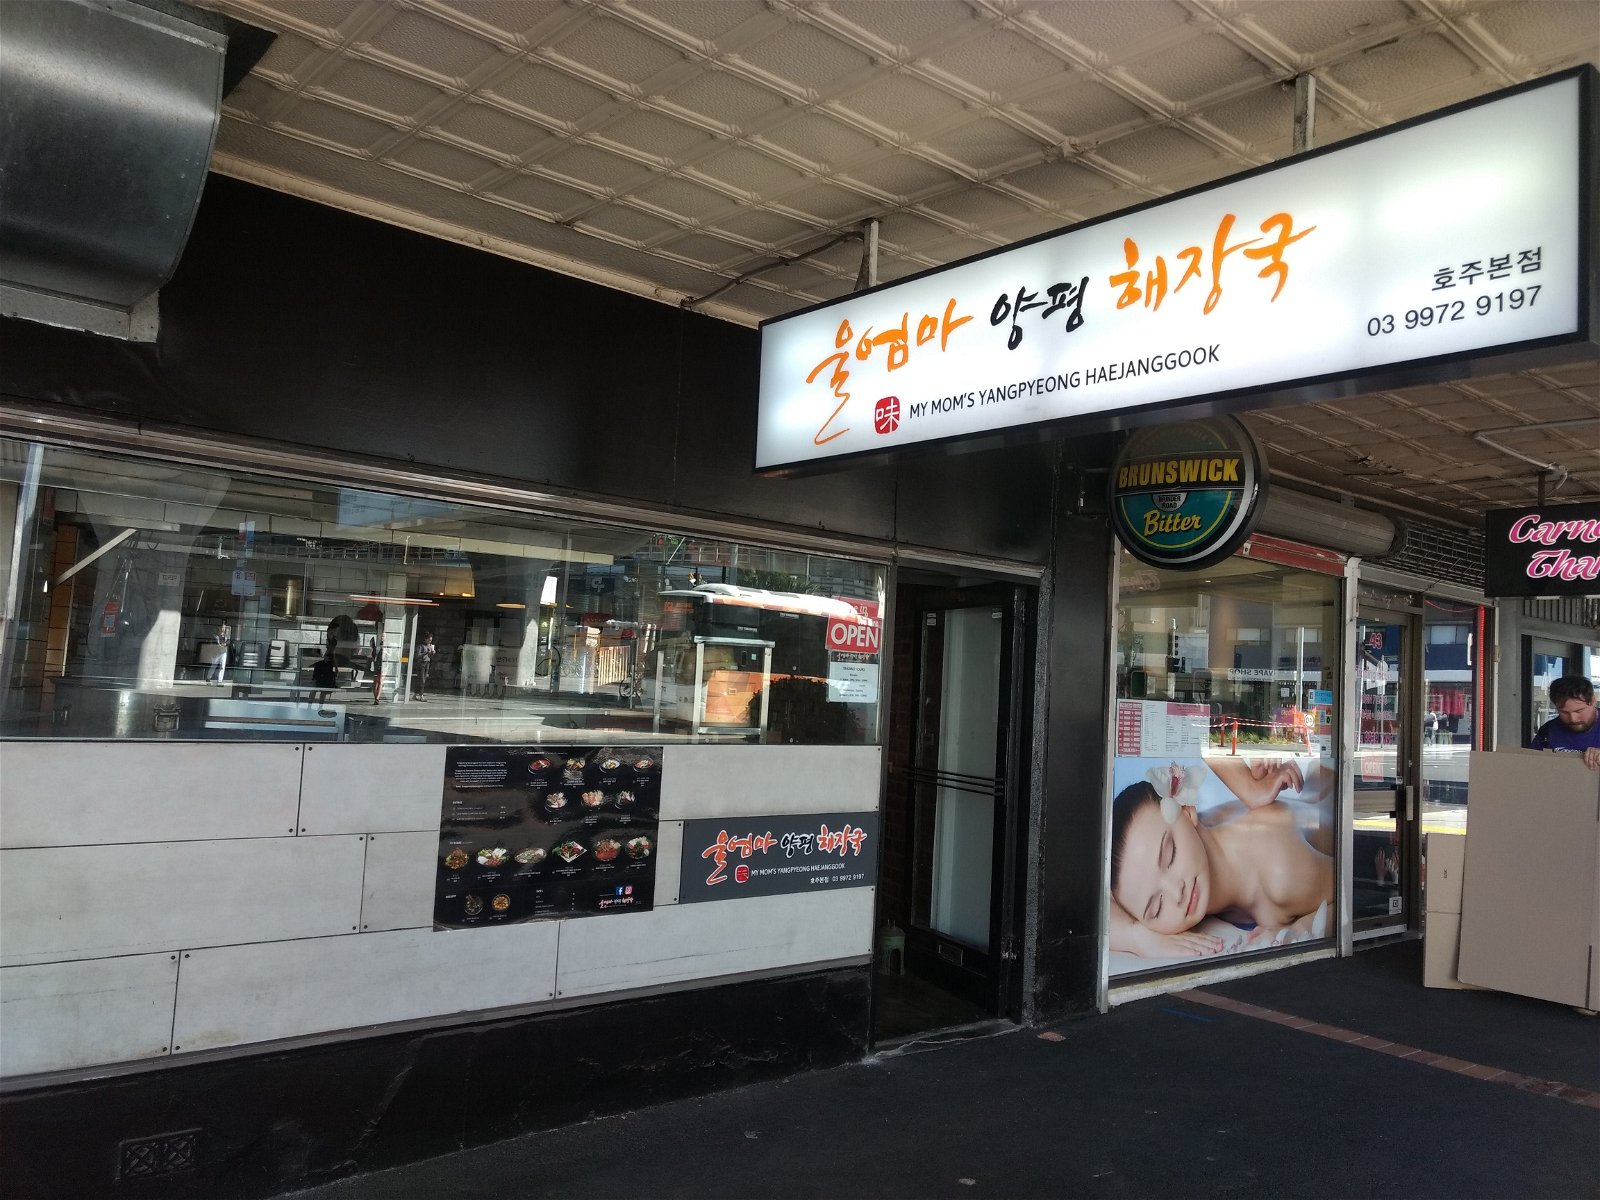 My Mom's Yangpyeong Haejanggook - Carnegie - Food Delivery Shop